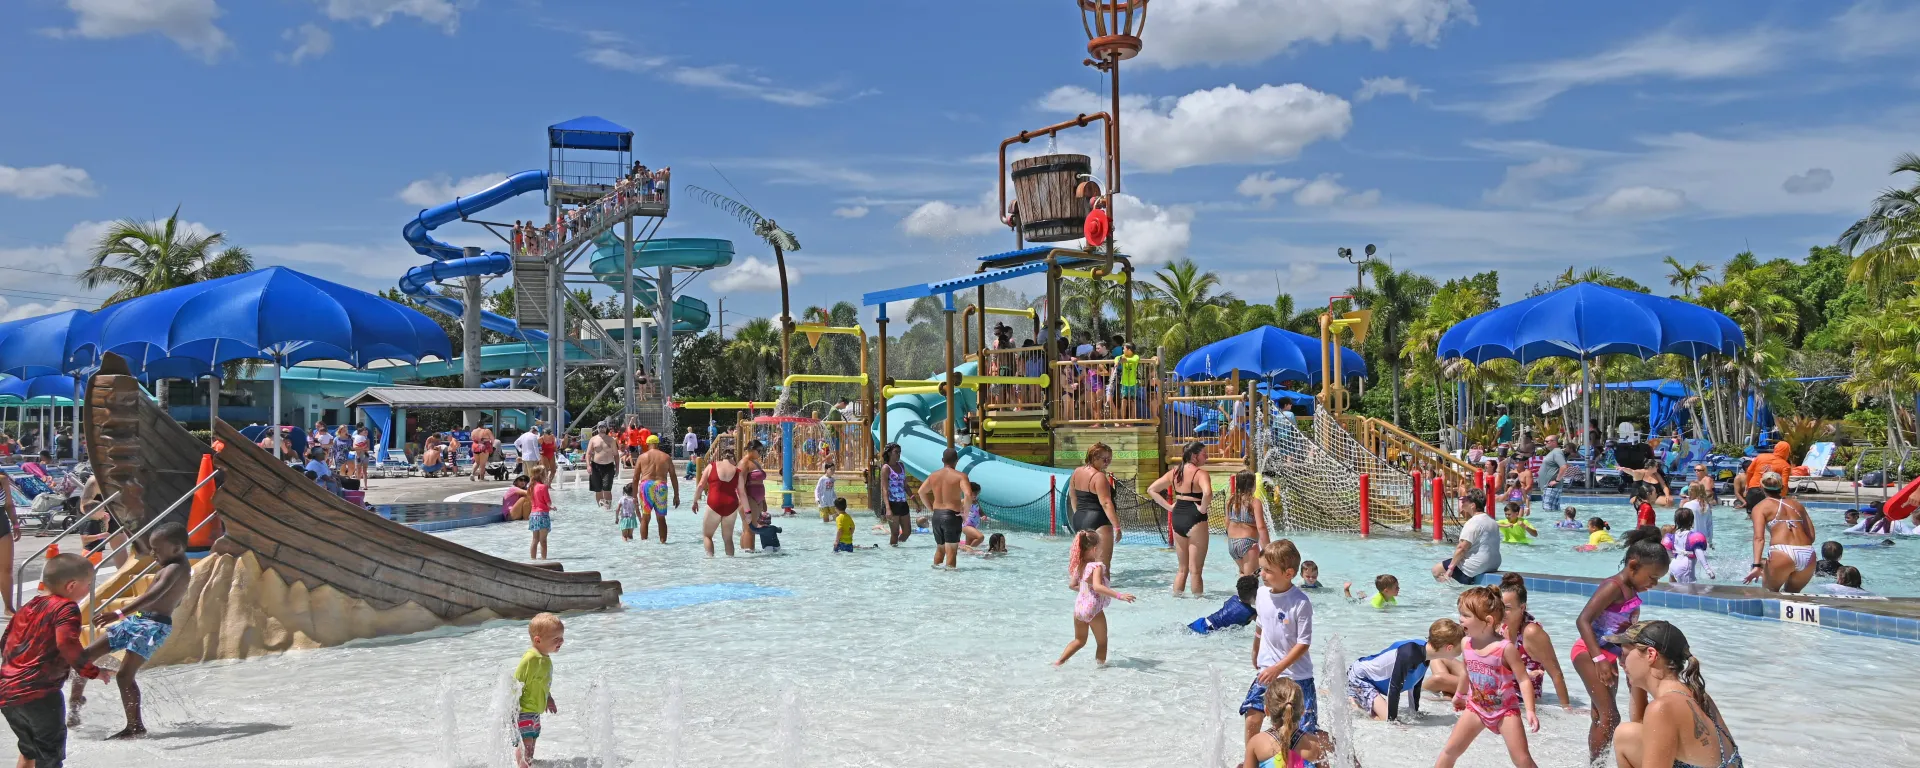 Sailfish Splash Waterpark's splash playground